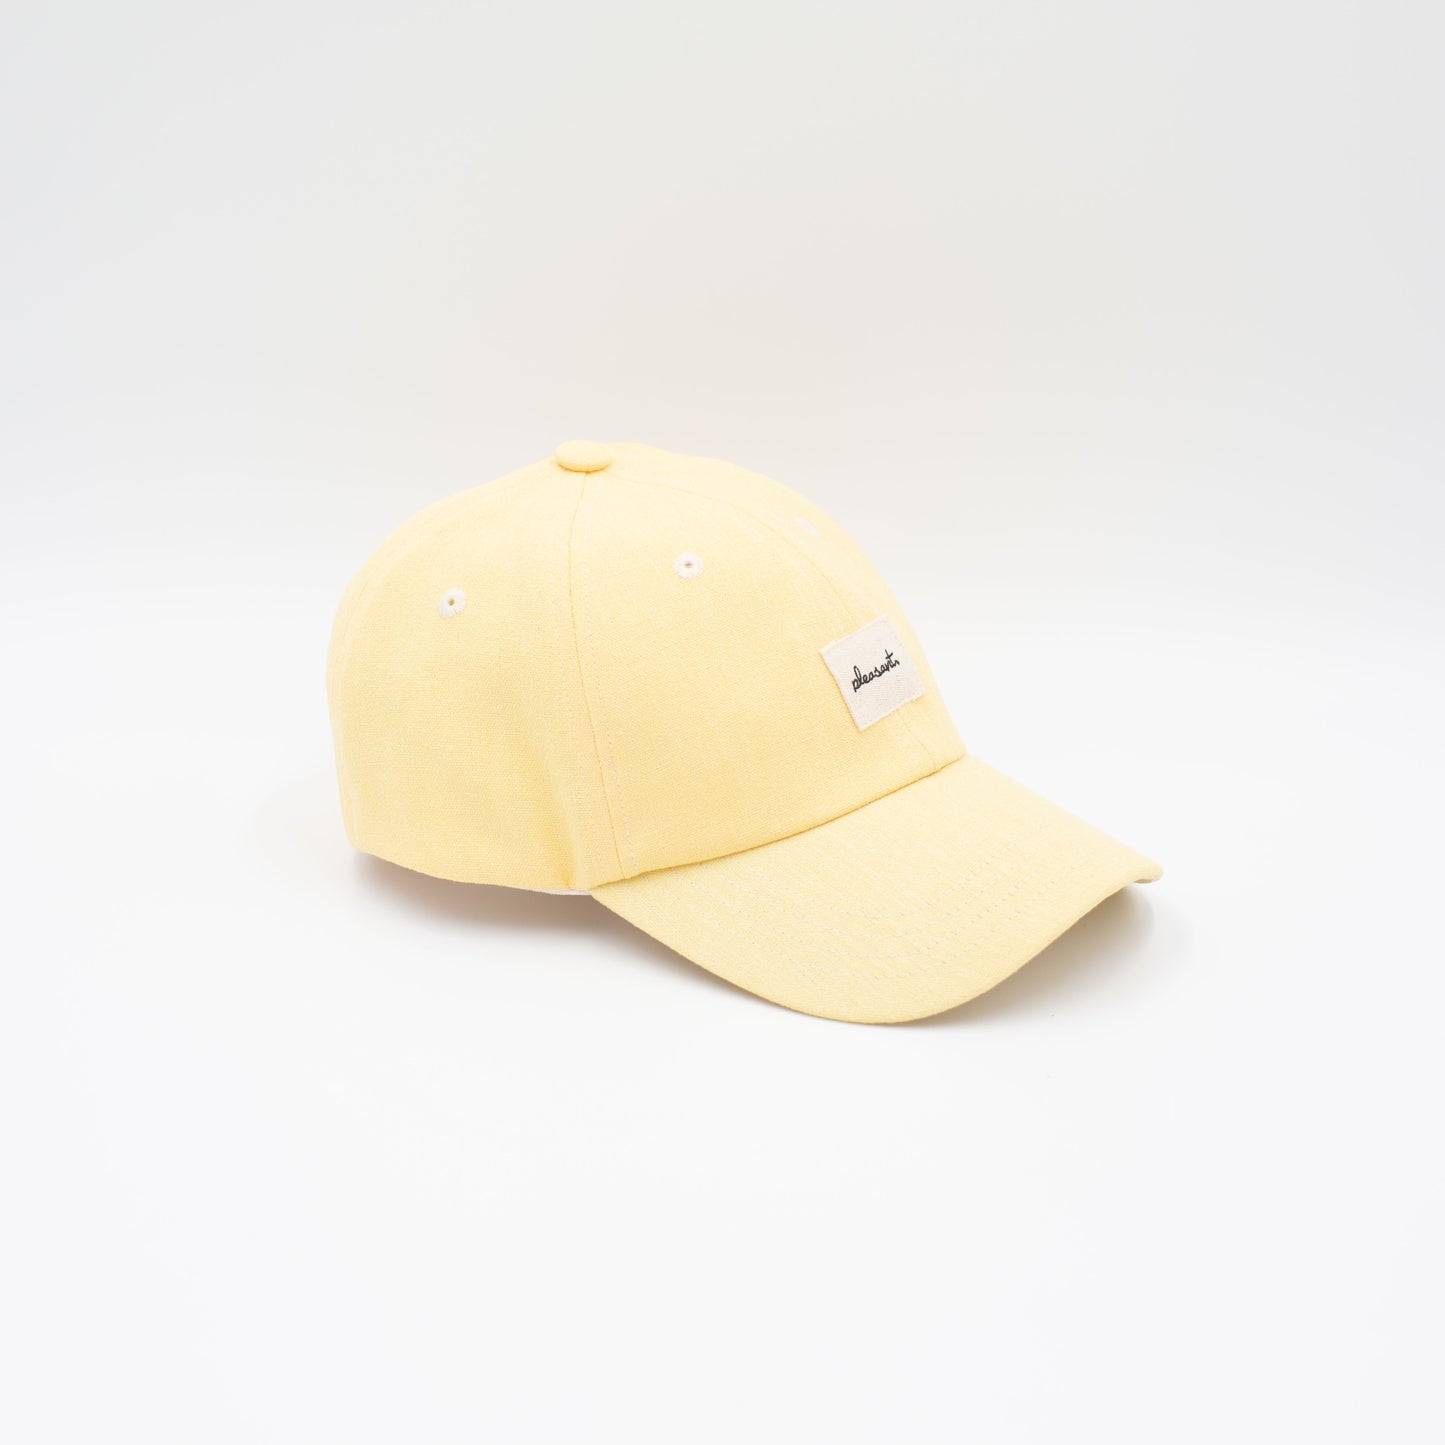 Bright yellow upcycled cap